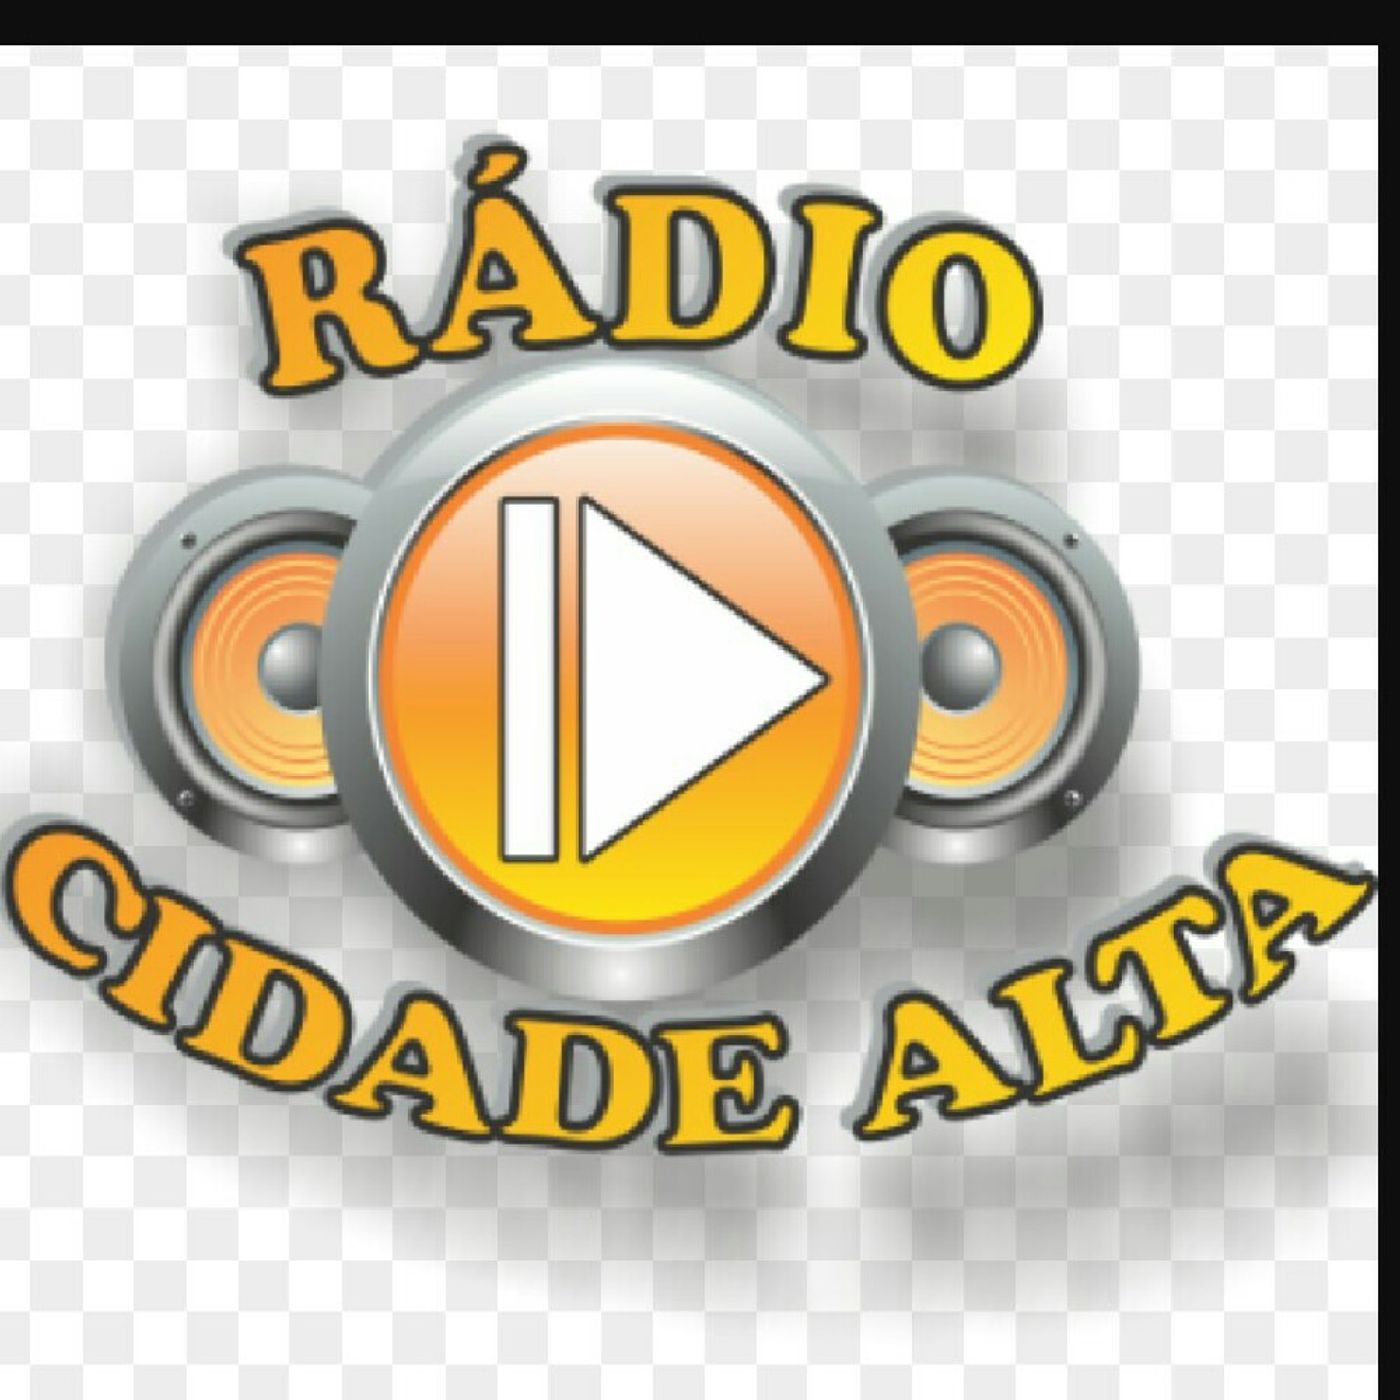 Radio Cidade Alta